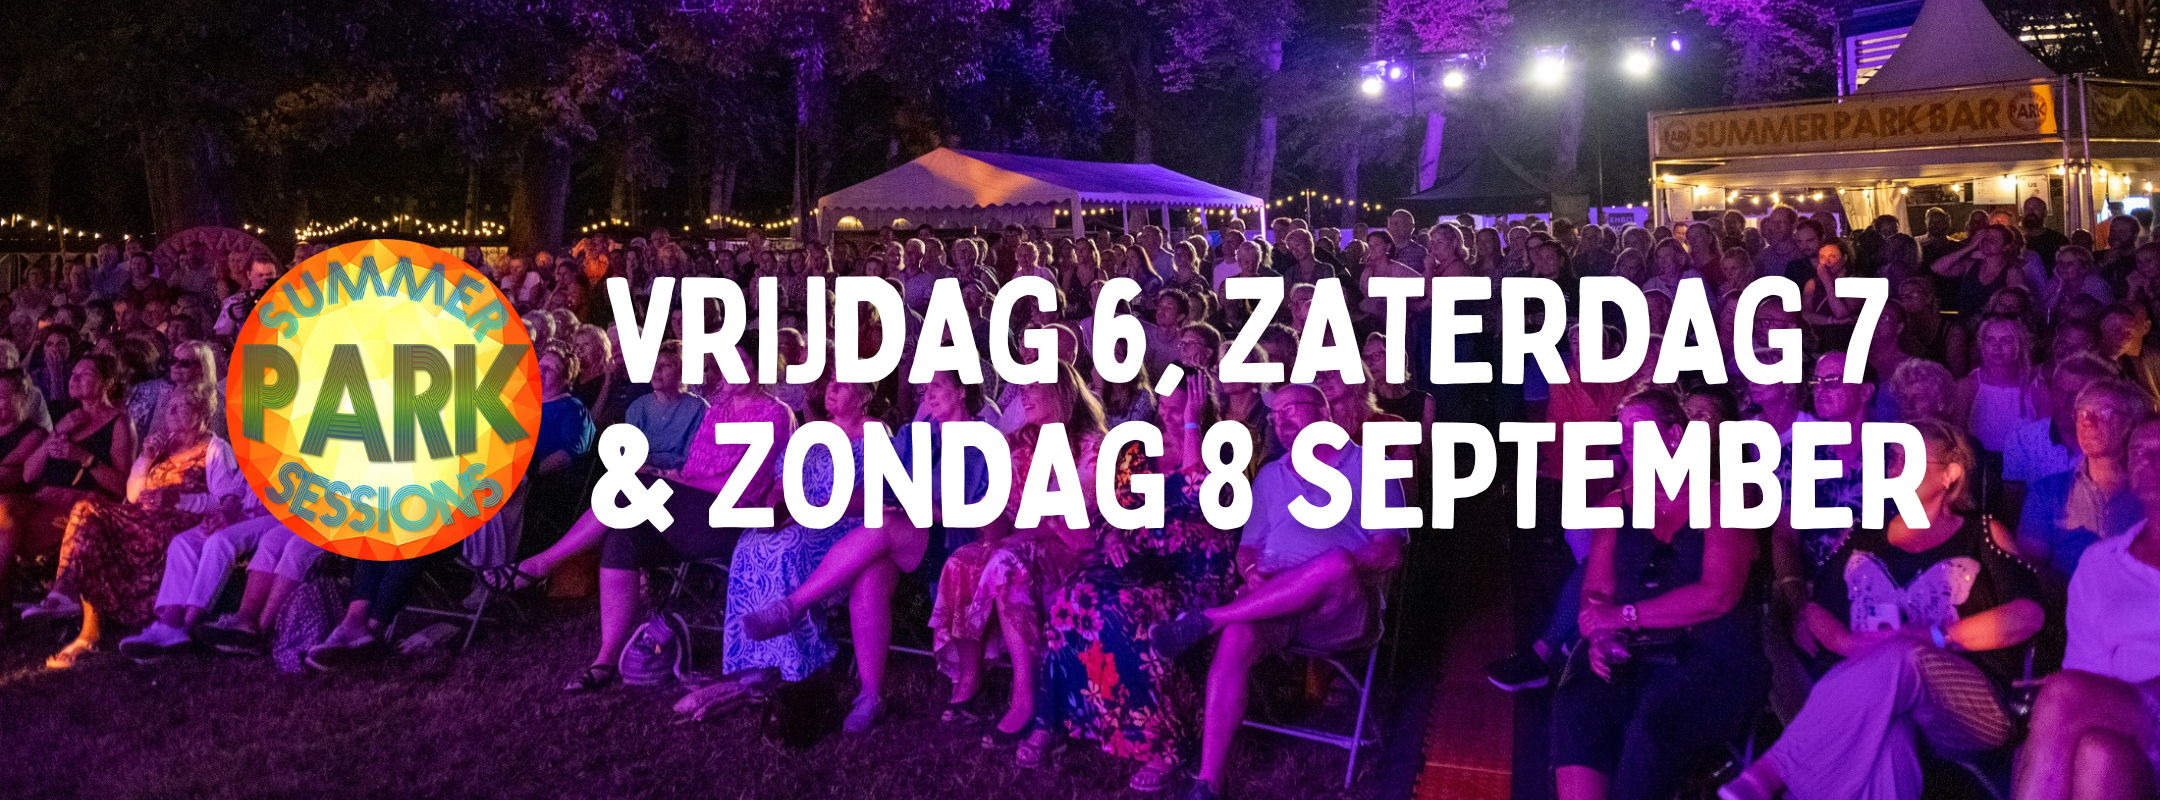 Summer Park Sessions: Cultureel spektakel in Velsen-Zuid!